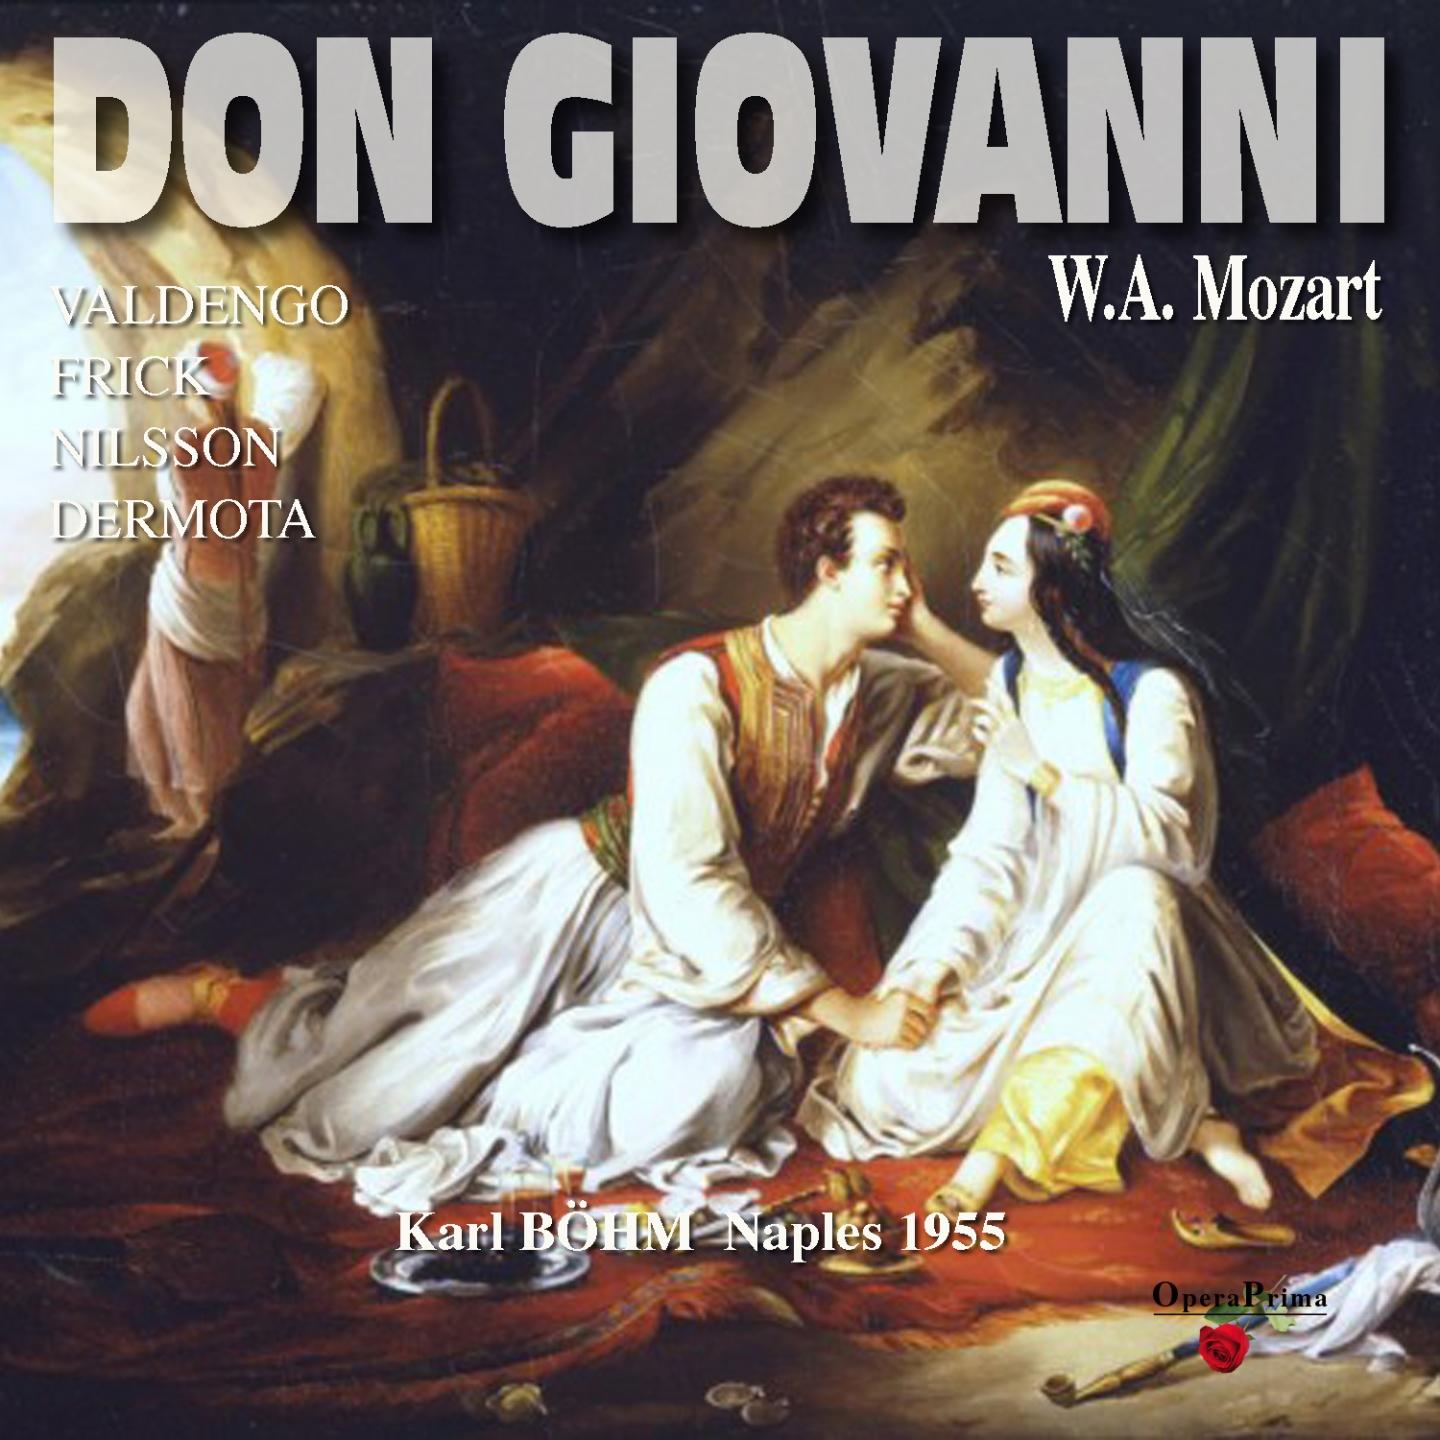 Don Giovanni: Act I - "Leporello, ove sei ? "